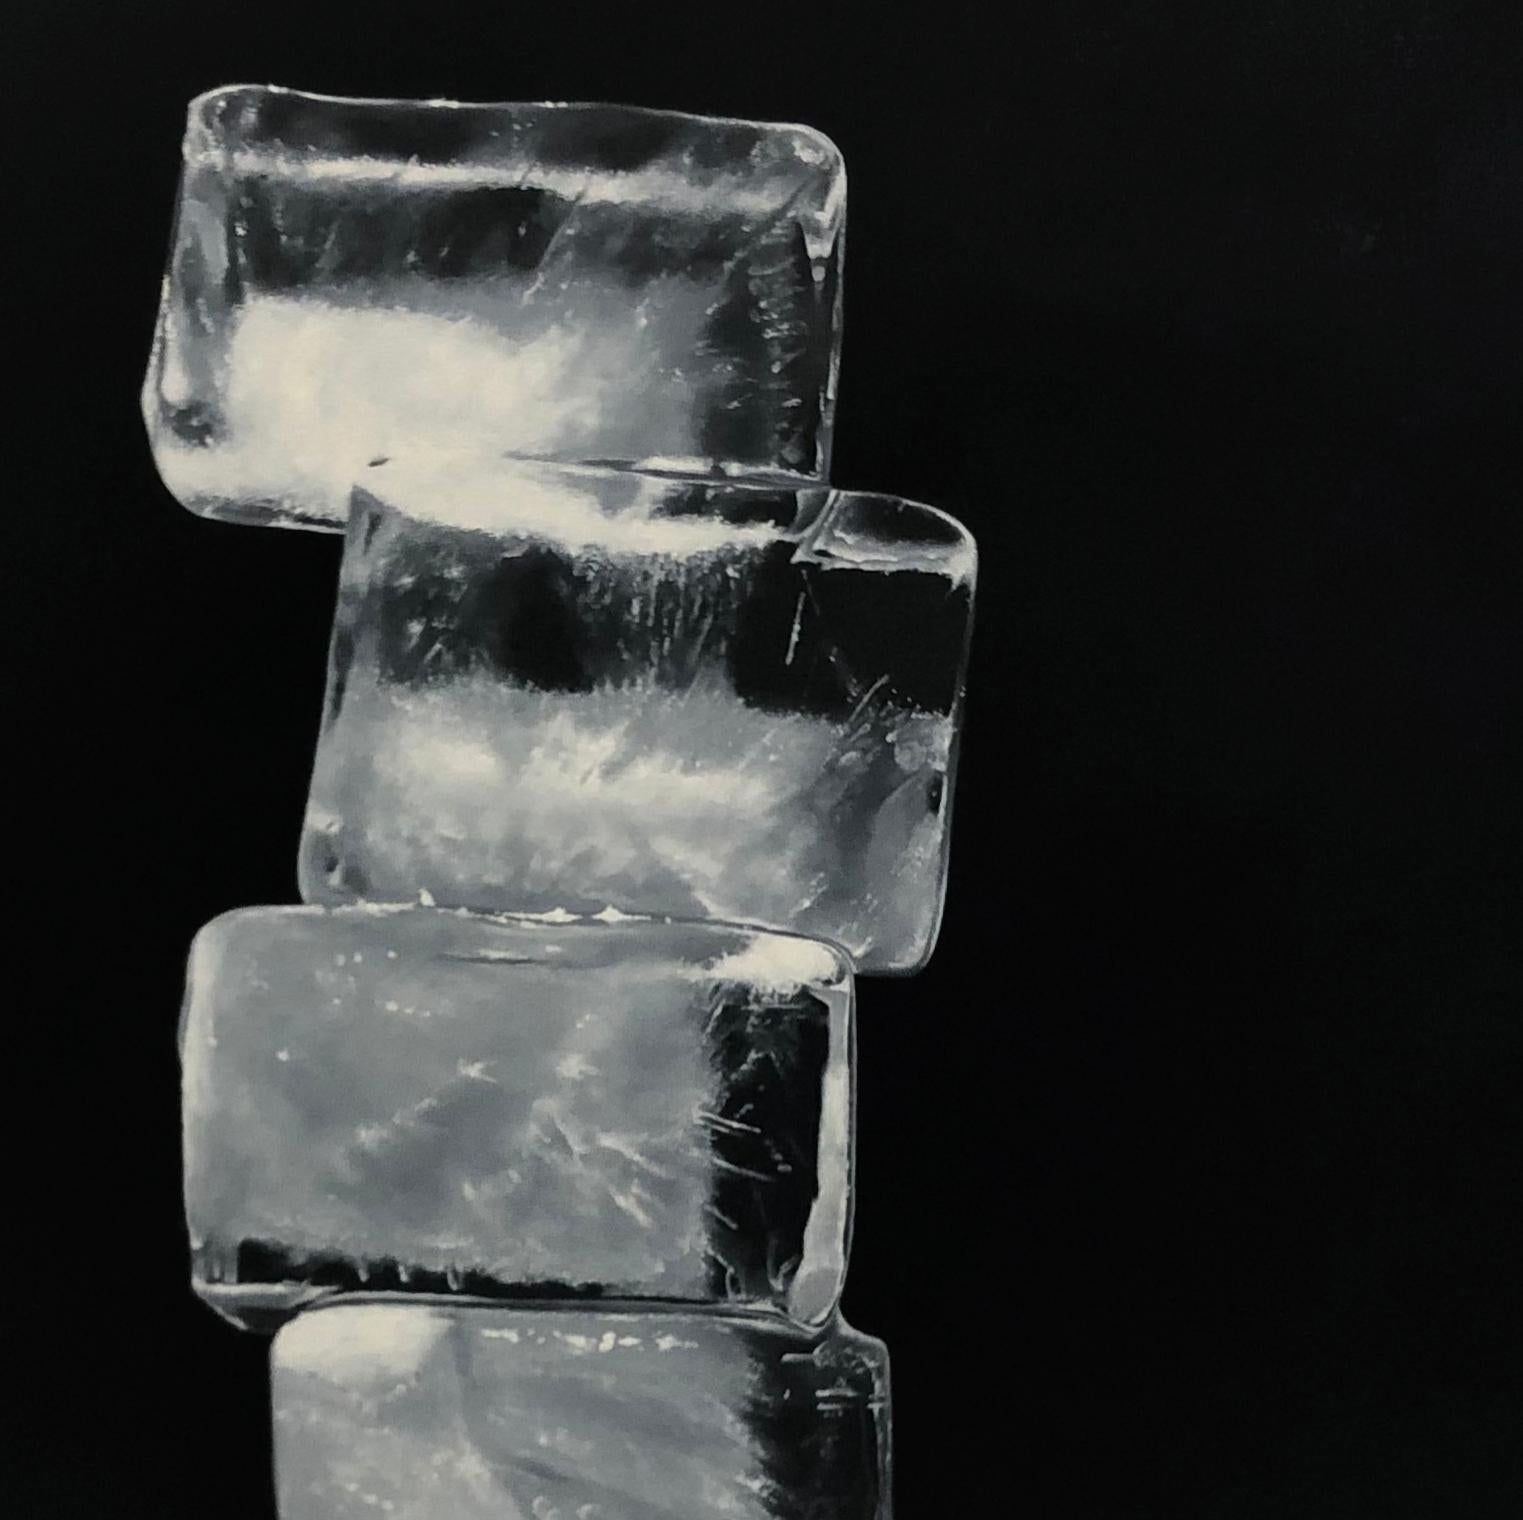 ice cube black and white photo